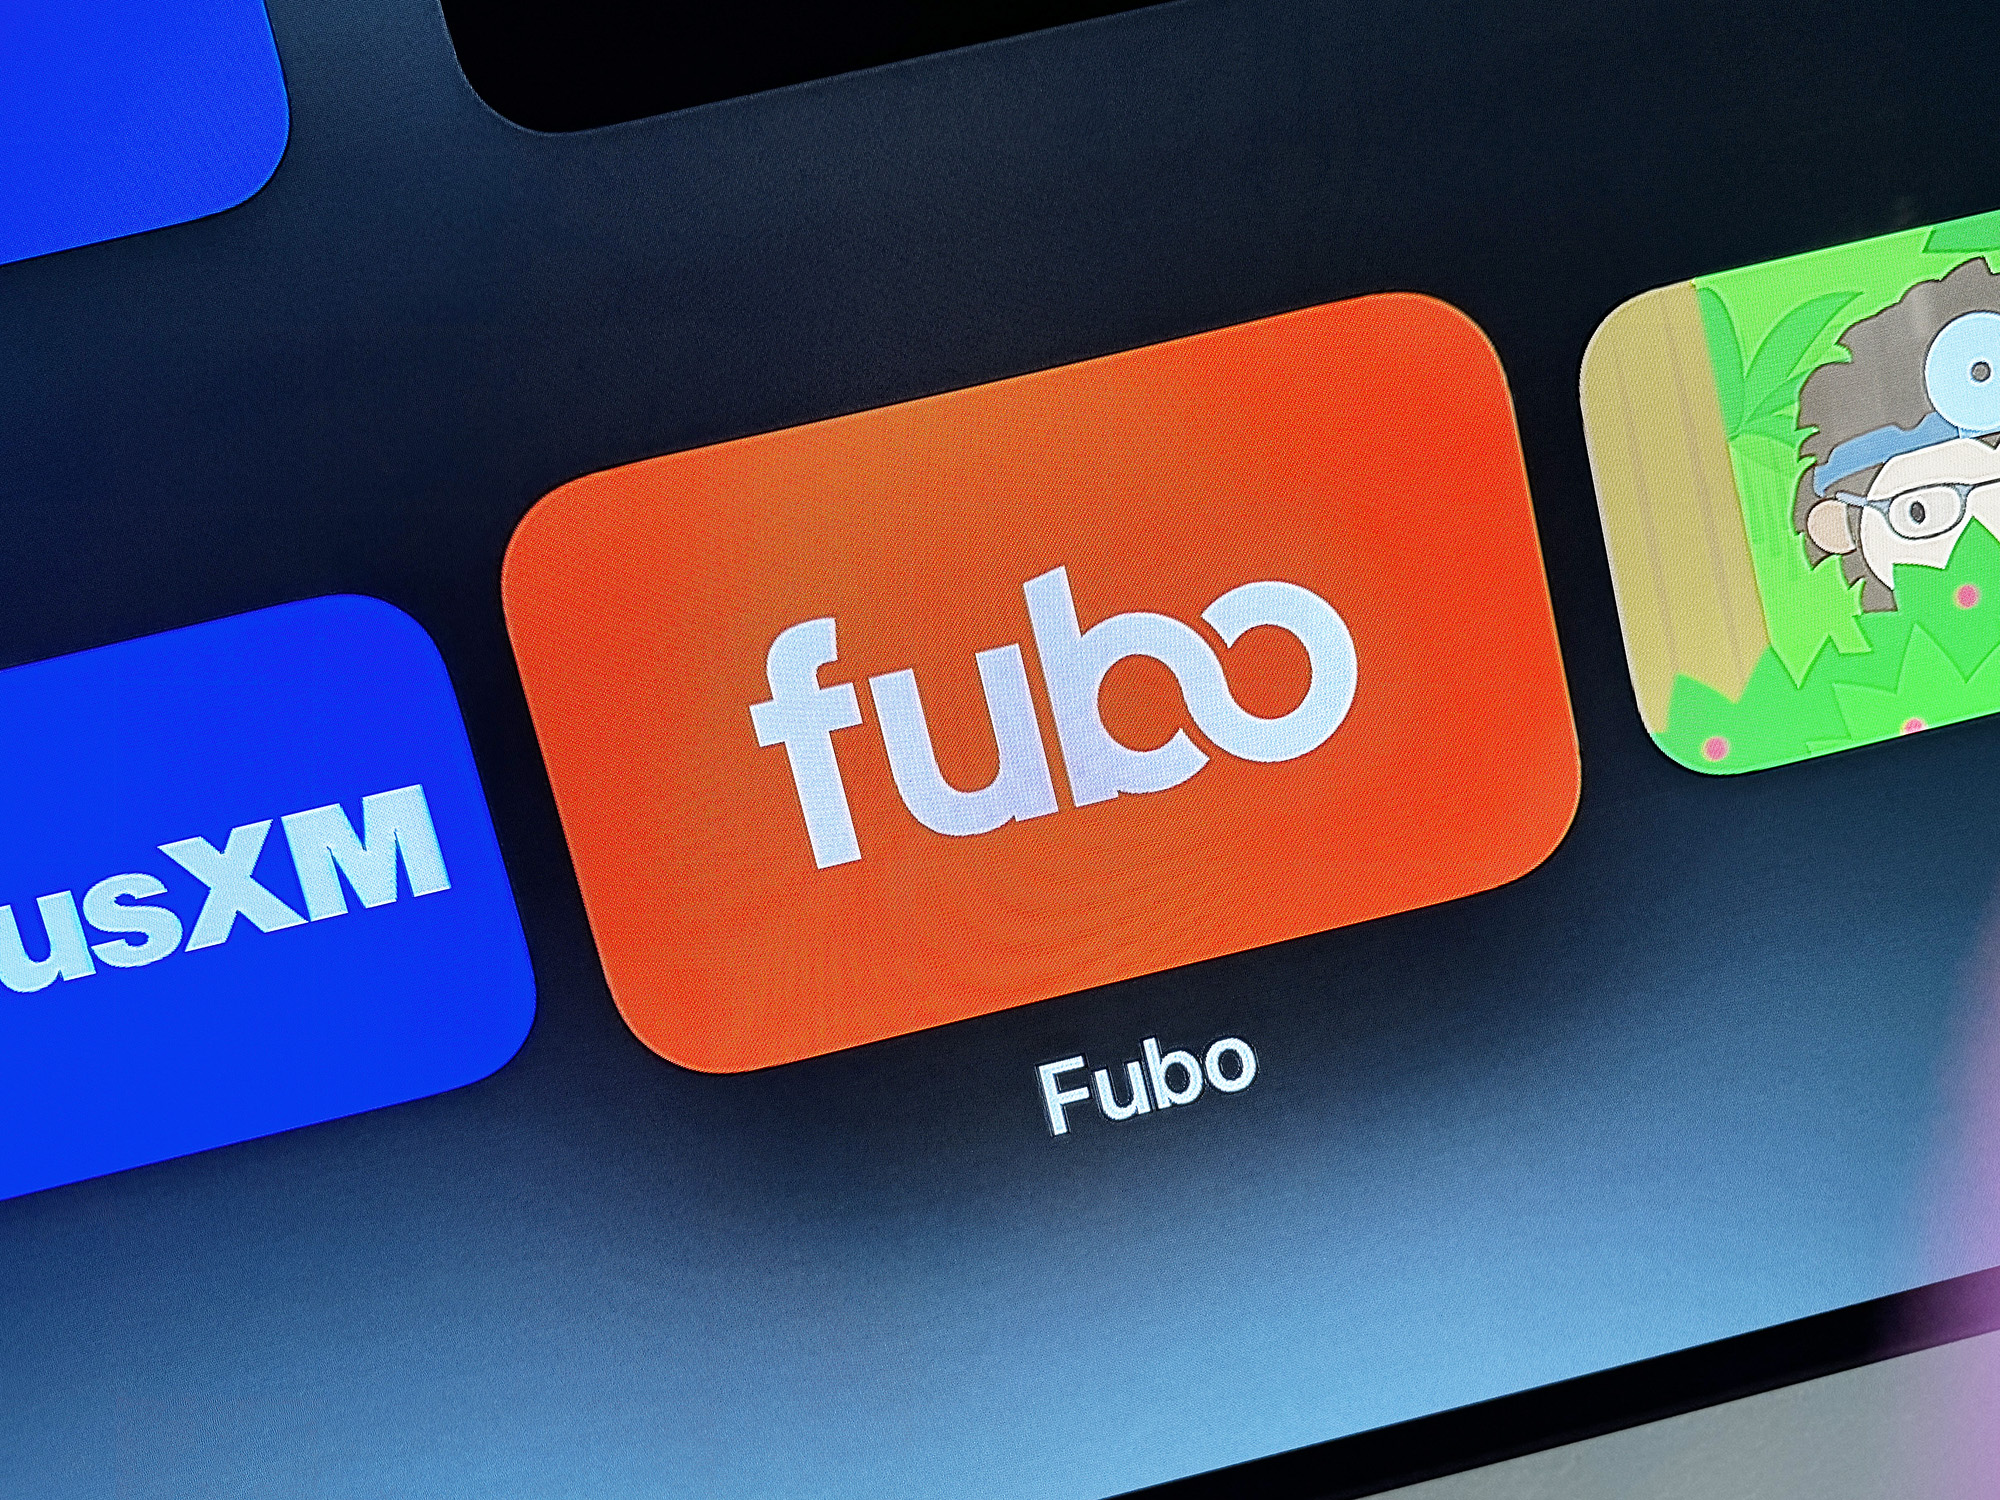 The Fubo app icon on Apple TV.